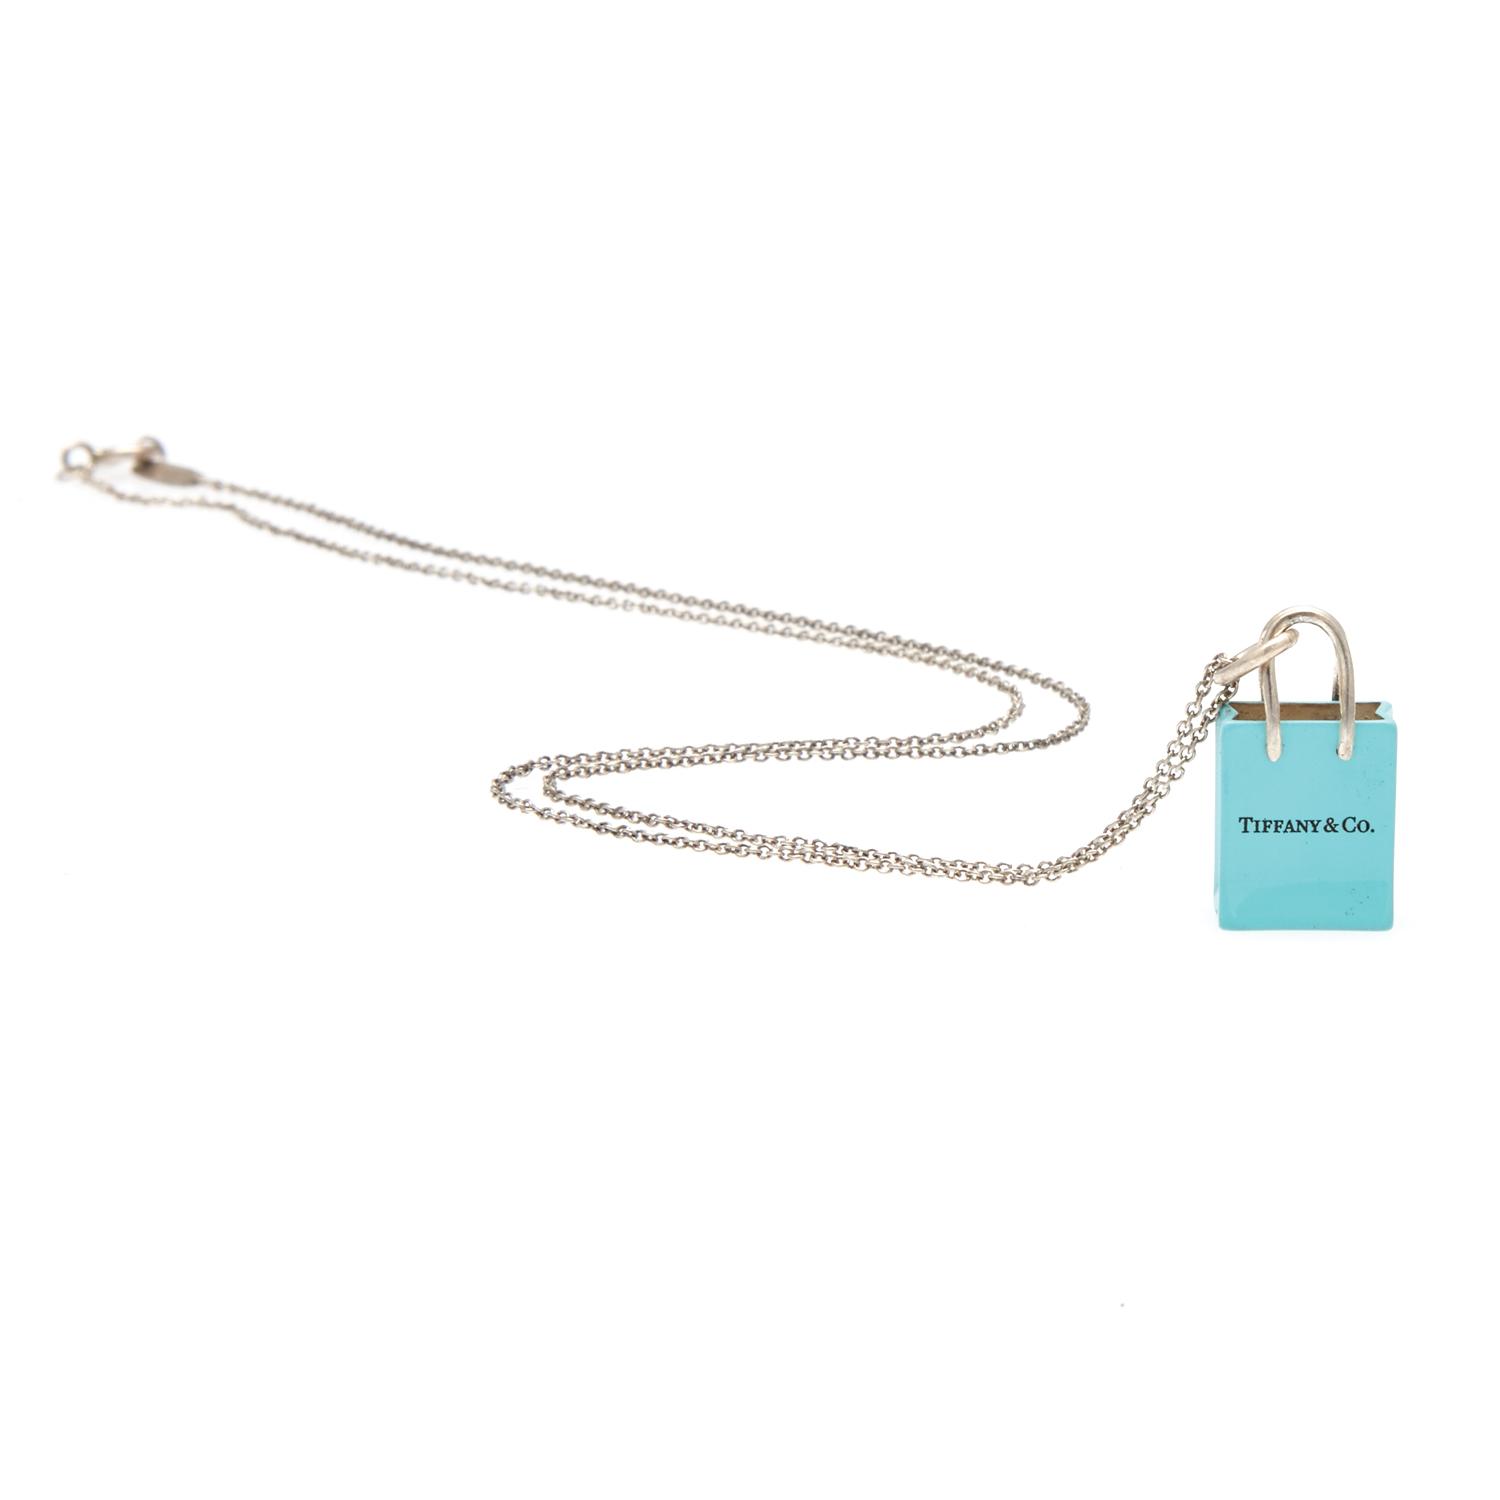 A Tiffany & Co. Blue Bag Charm on Chain - Price Estimate: $150 - $250